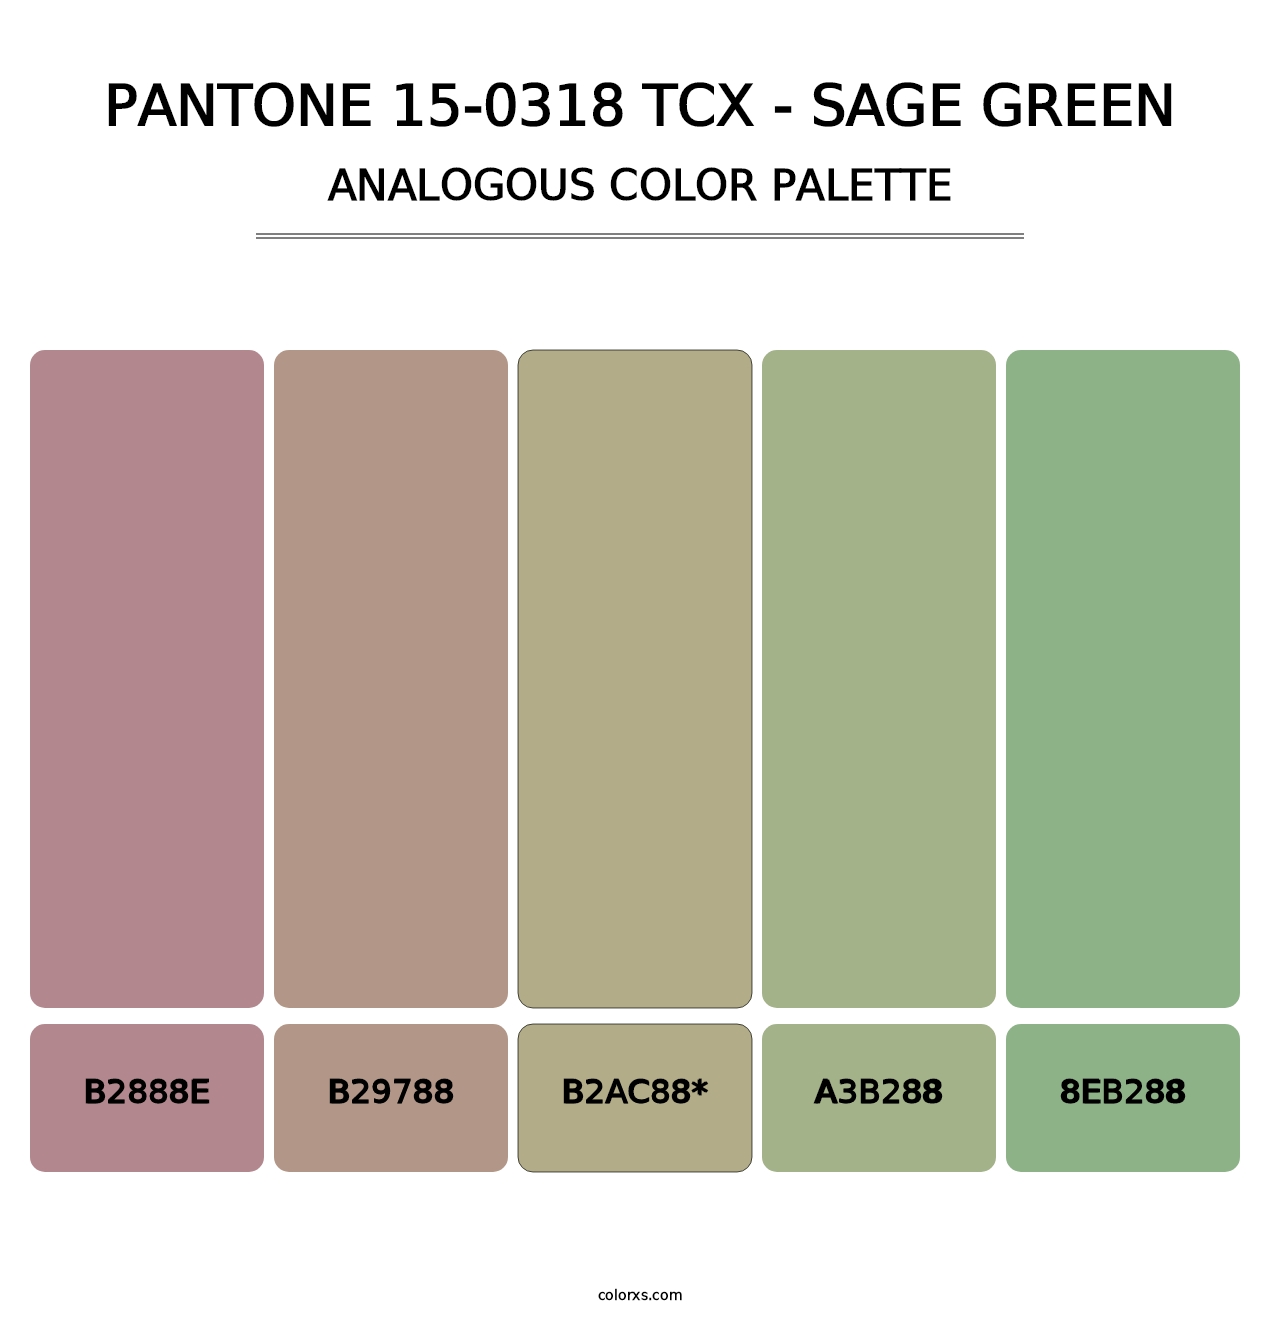 PANTONE 15-0318 TCX - Sage Green - Analogous Color Palette